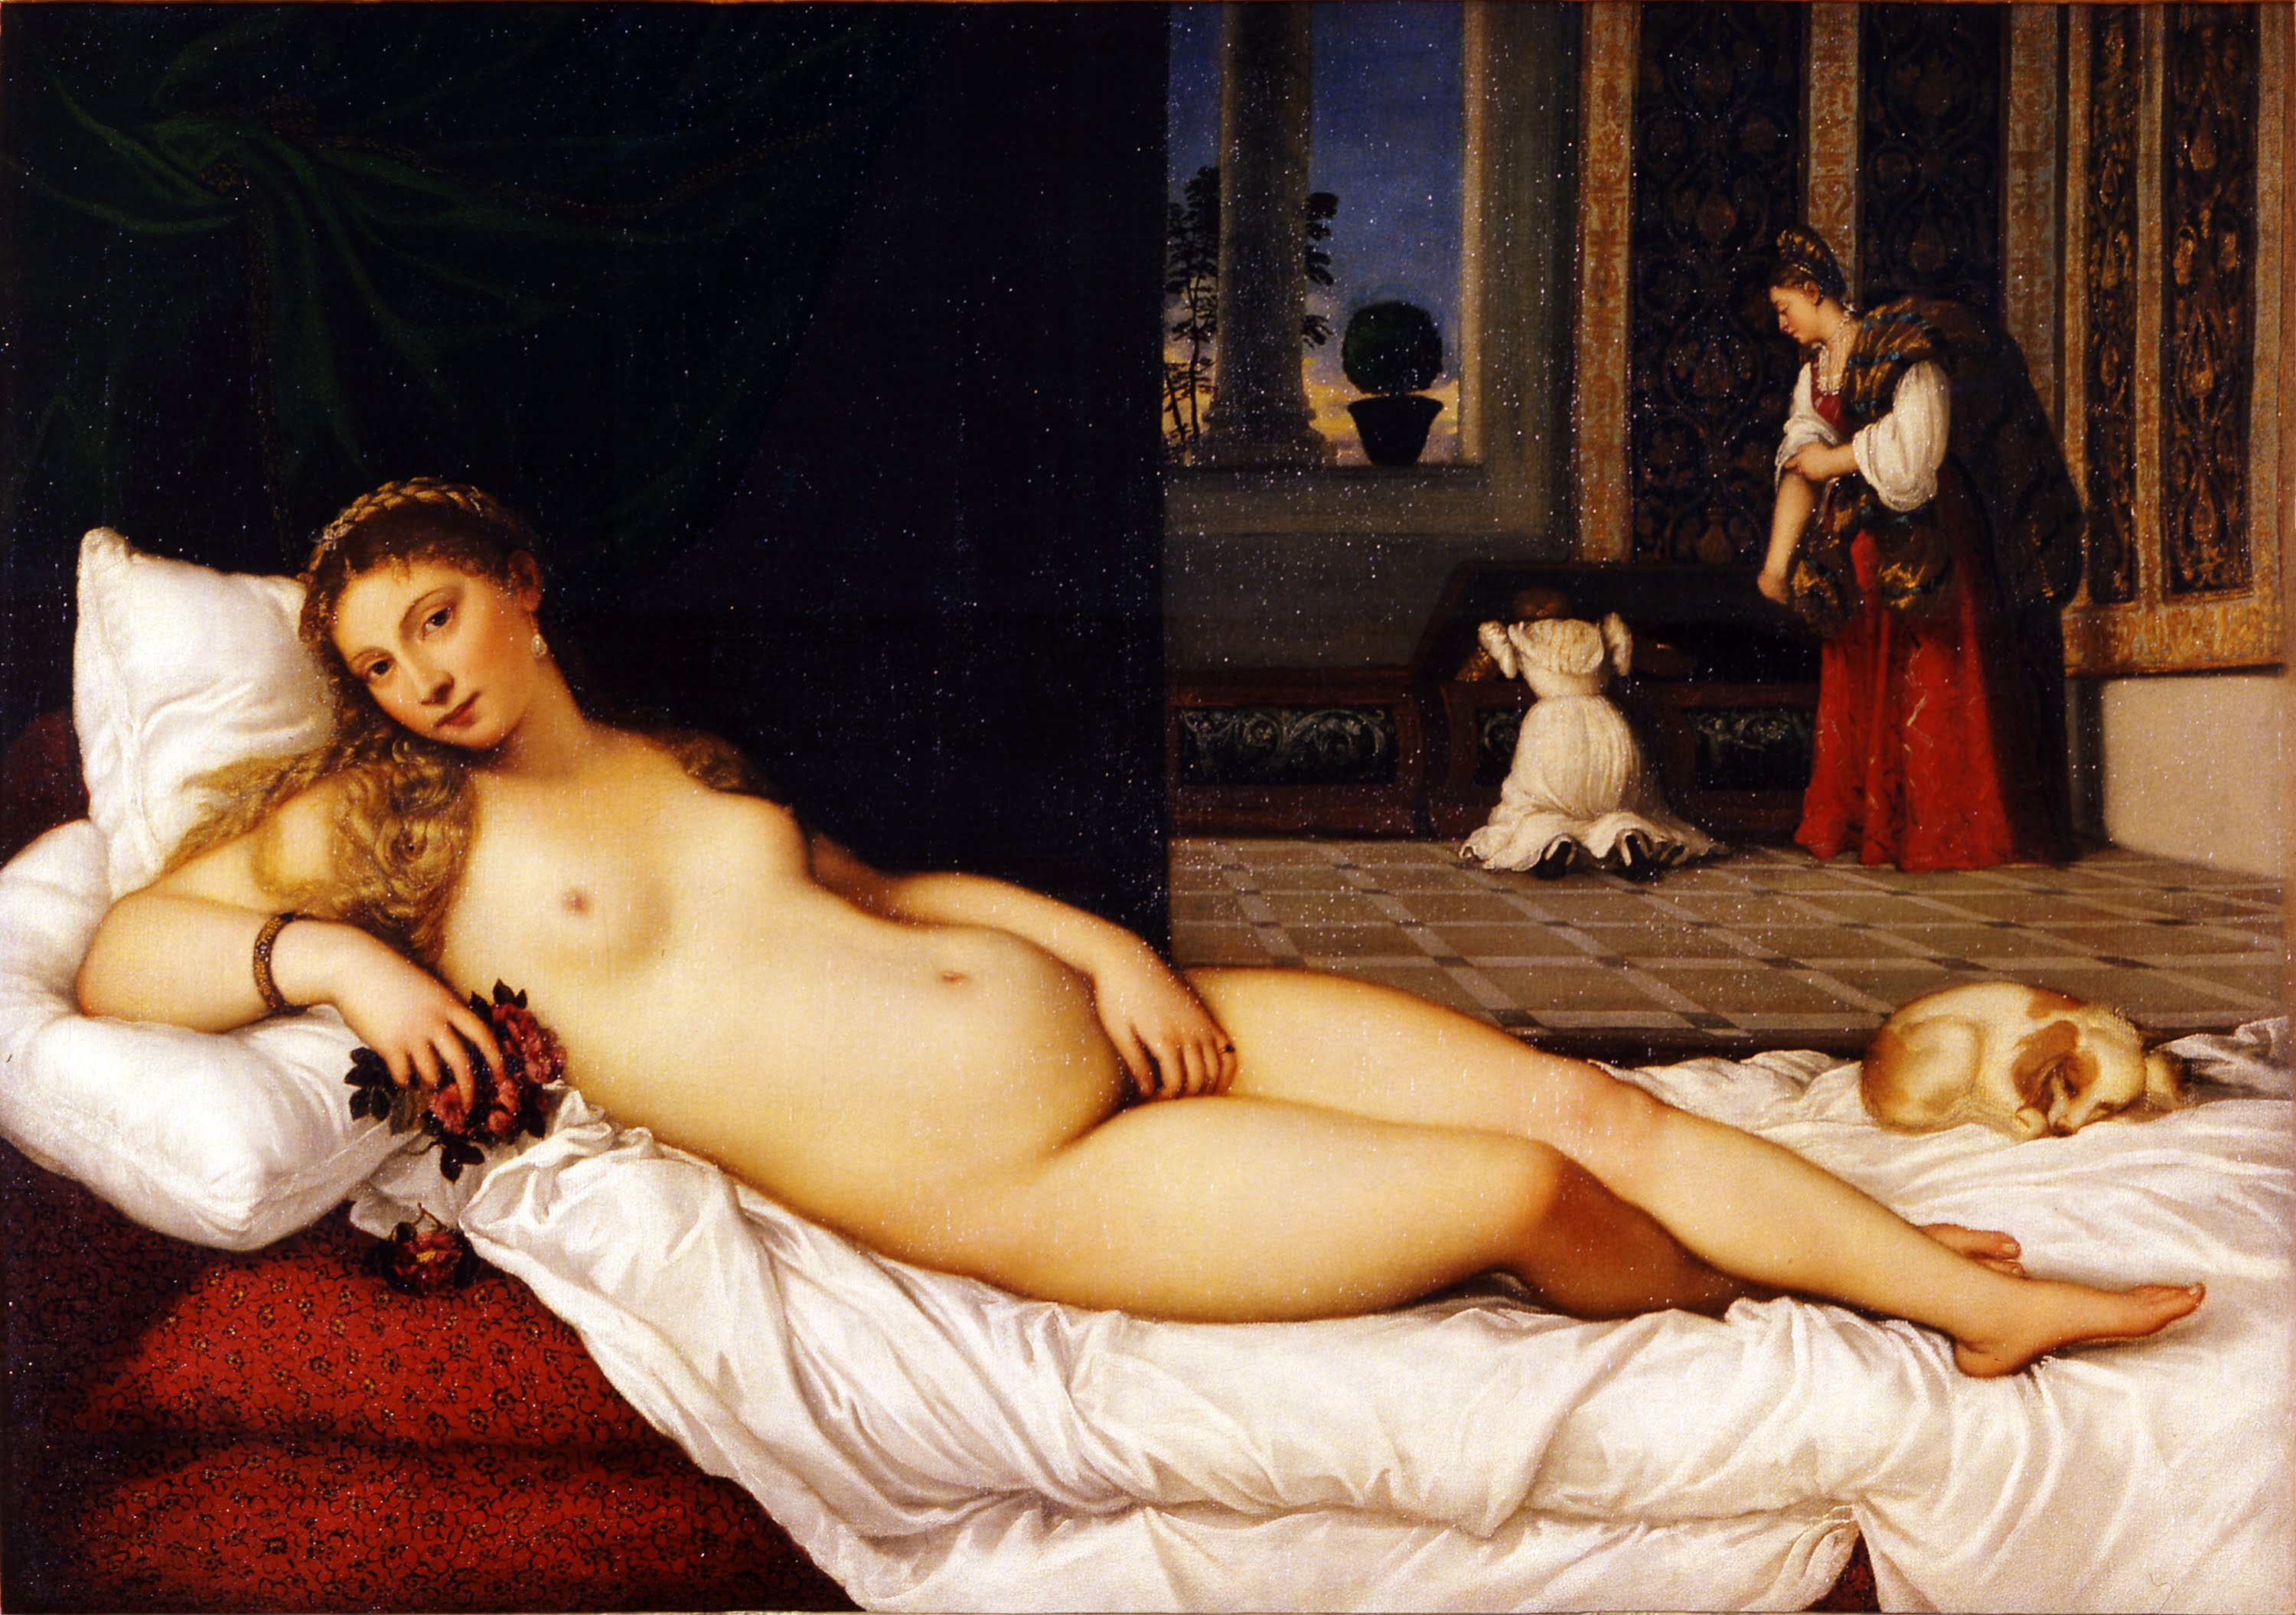 Urbinói Venus by  Titian - 1538 - 119.20 x 165.50 cm 